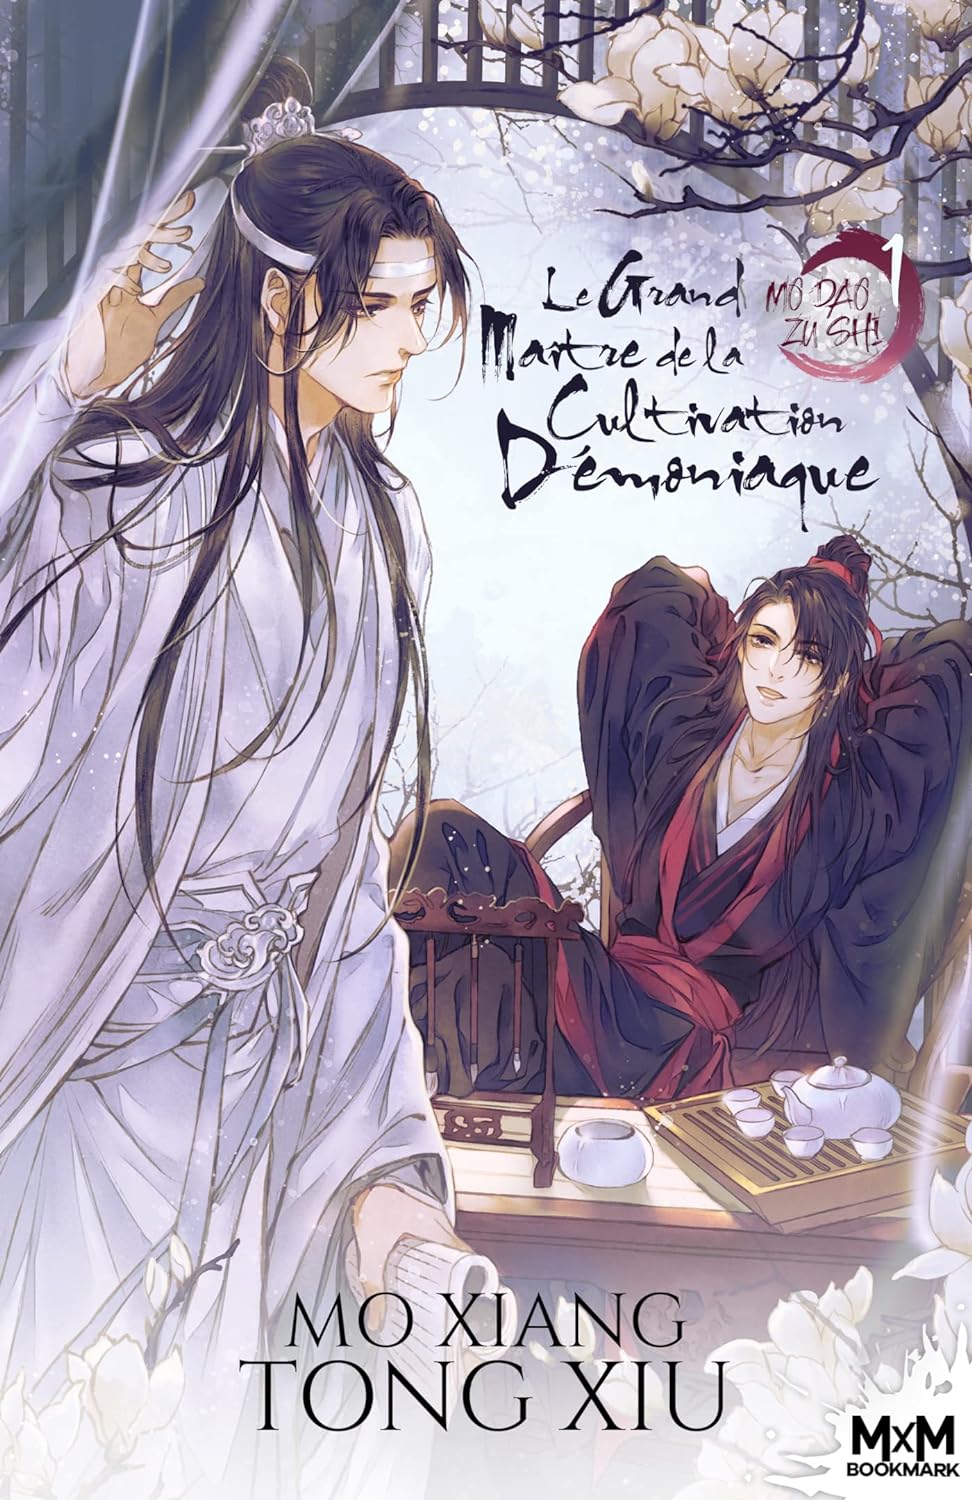 Mo Xiang Tong Xiu: Mo Dao Zu Shi - Le Grand Maître de la Cultivation Démoniaque, Tome 1 (Hardcover, français language, MxM Bookmark)